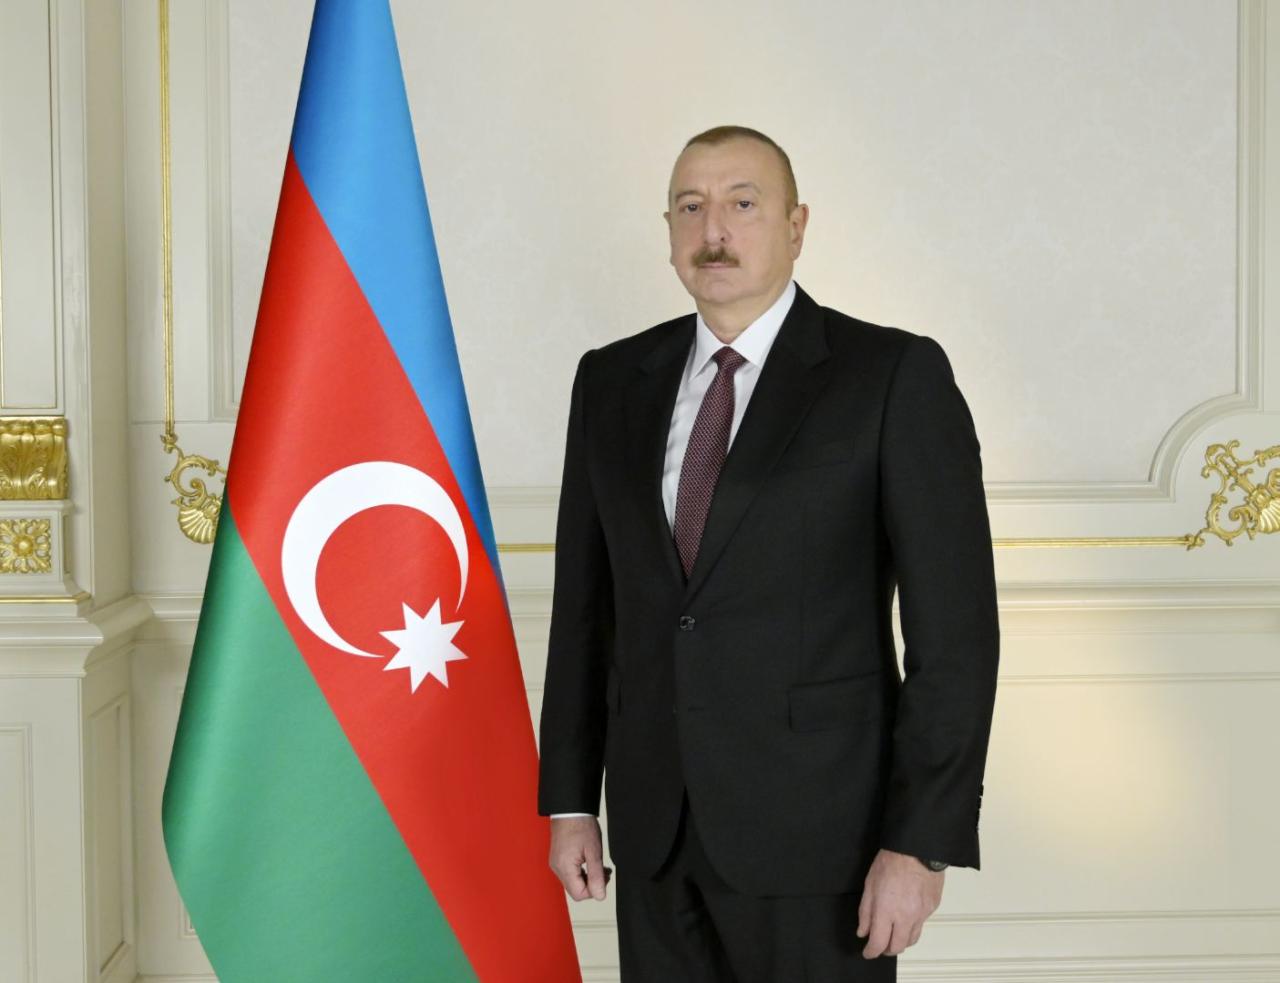 İlham Aliyev congratulates president of Vietnam